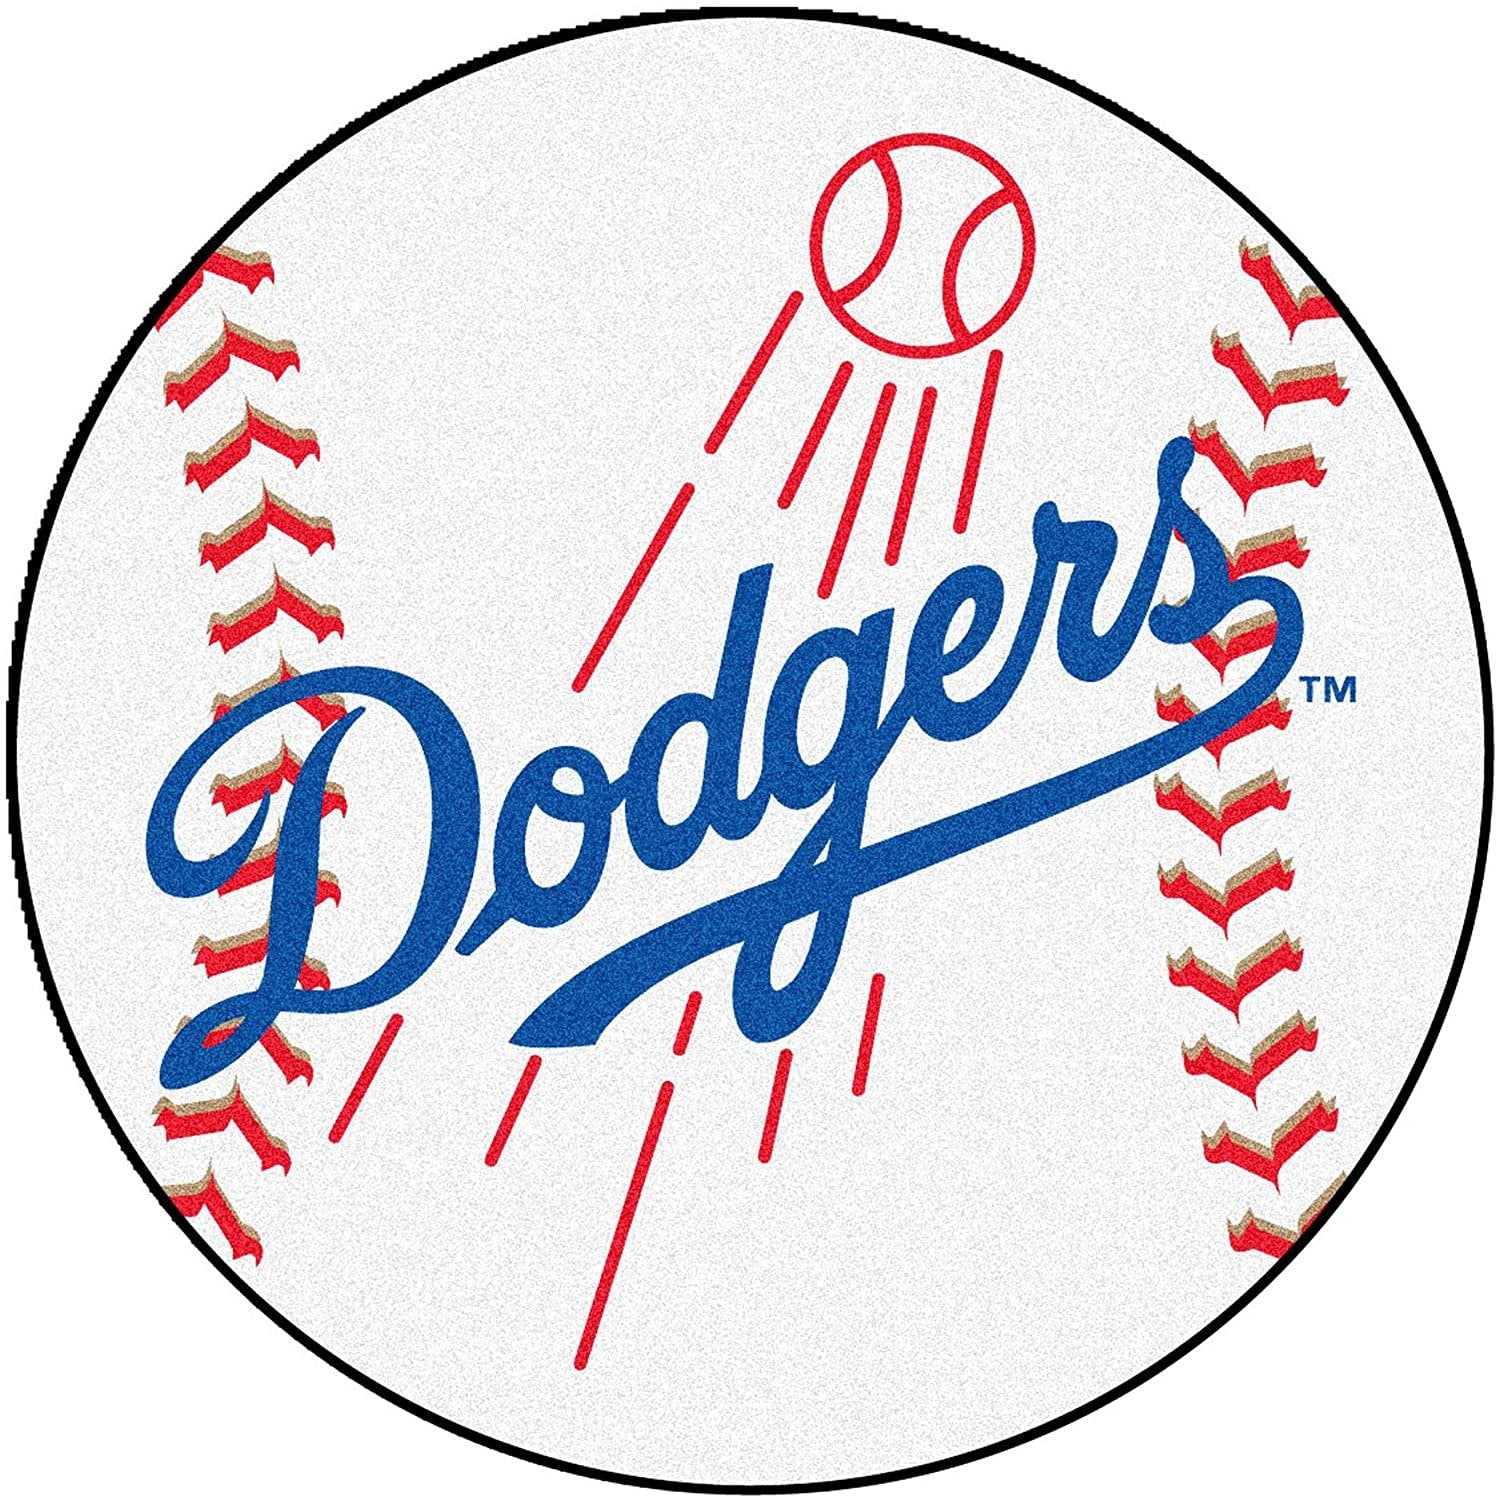 Los Angeles Dodgers 27 Inch Area Rug Floor Mat, Nylon, Anti-Skid Backing, Baseball Shaped